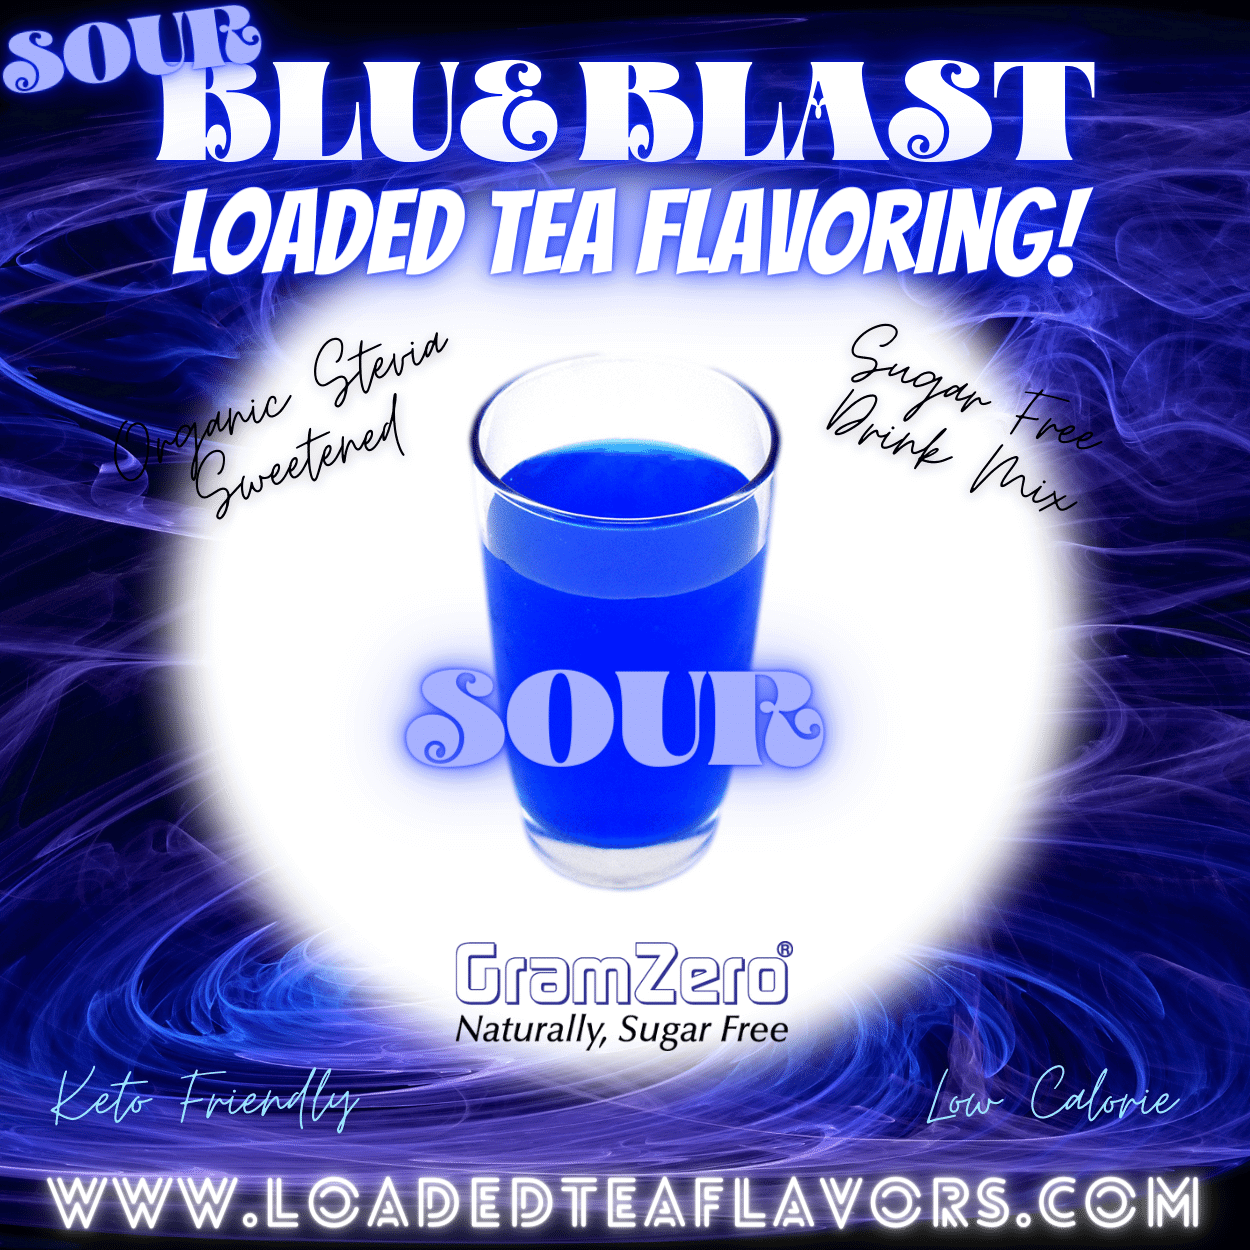 SOUR BLUE BLAST Sugar Free Drink Mix 😜🚀 Loaded Tea Flavoring